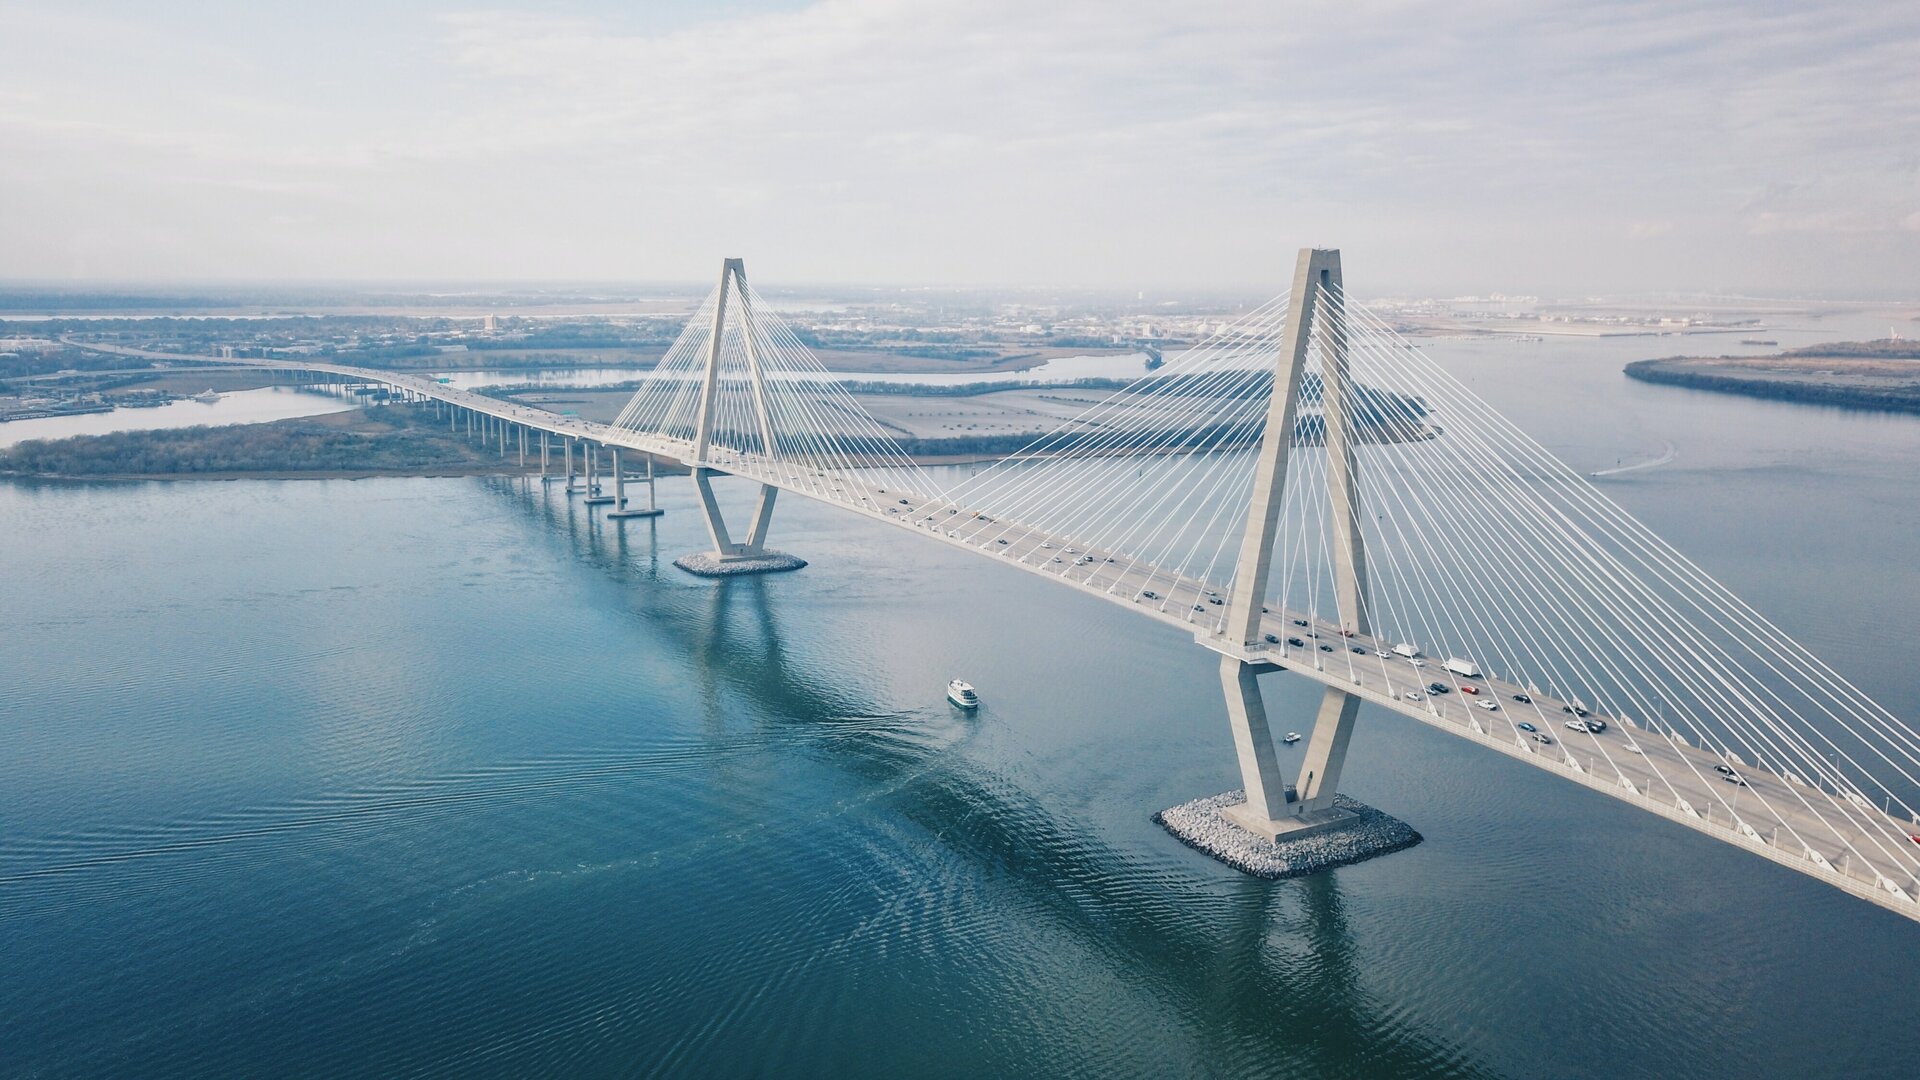 Moderne lange brug over zee met ruitvormige brugpijlers en kabels.